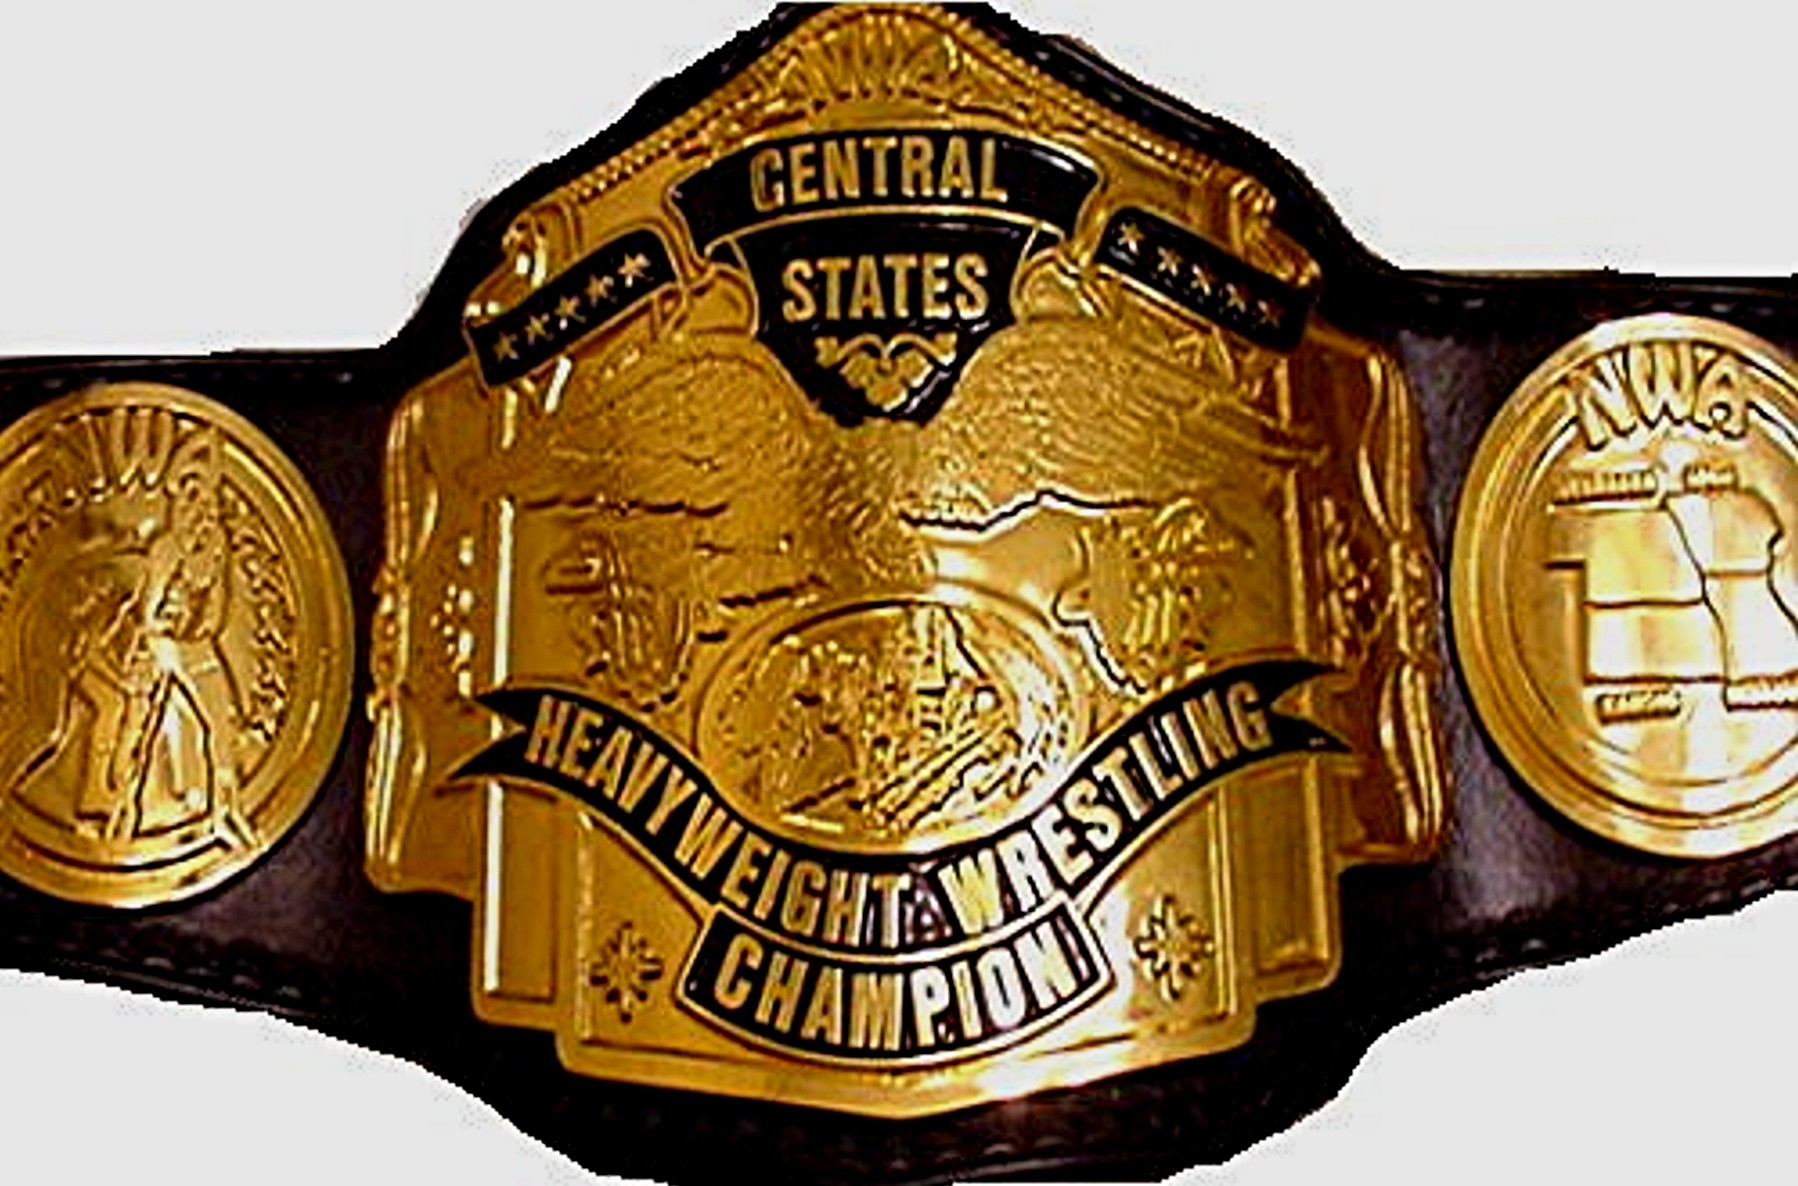 NWA Central States Heavyweight Championship | Pro Wrestling | FANDOM powered by Wikia1798 x 1186